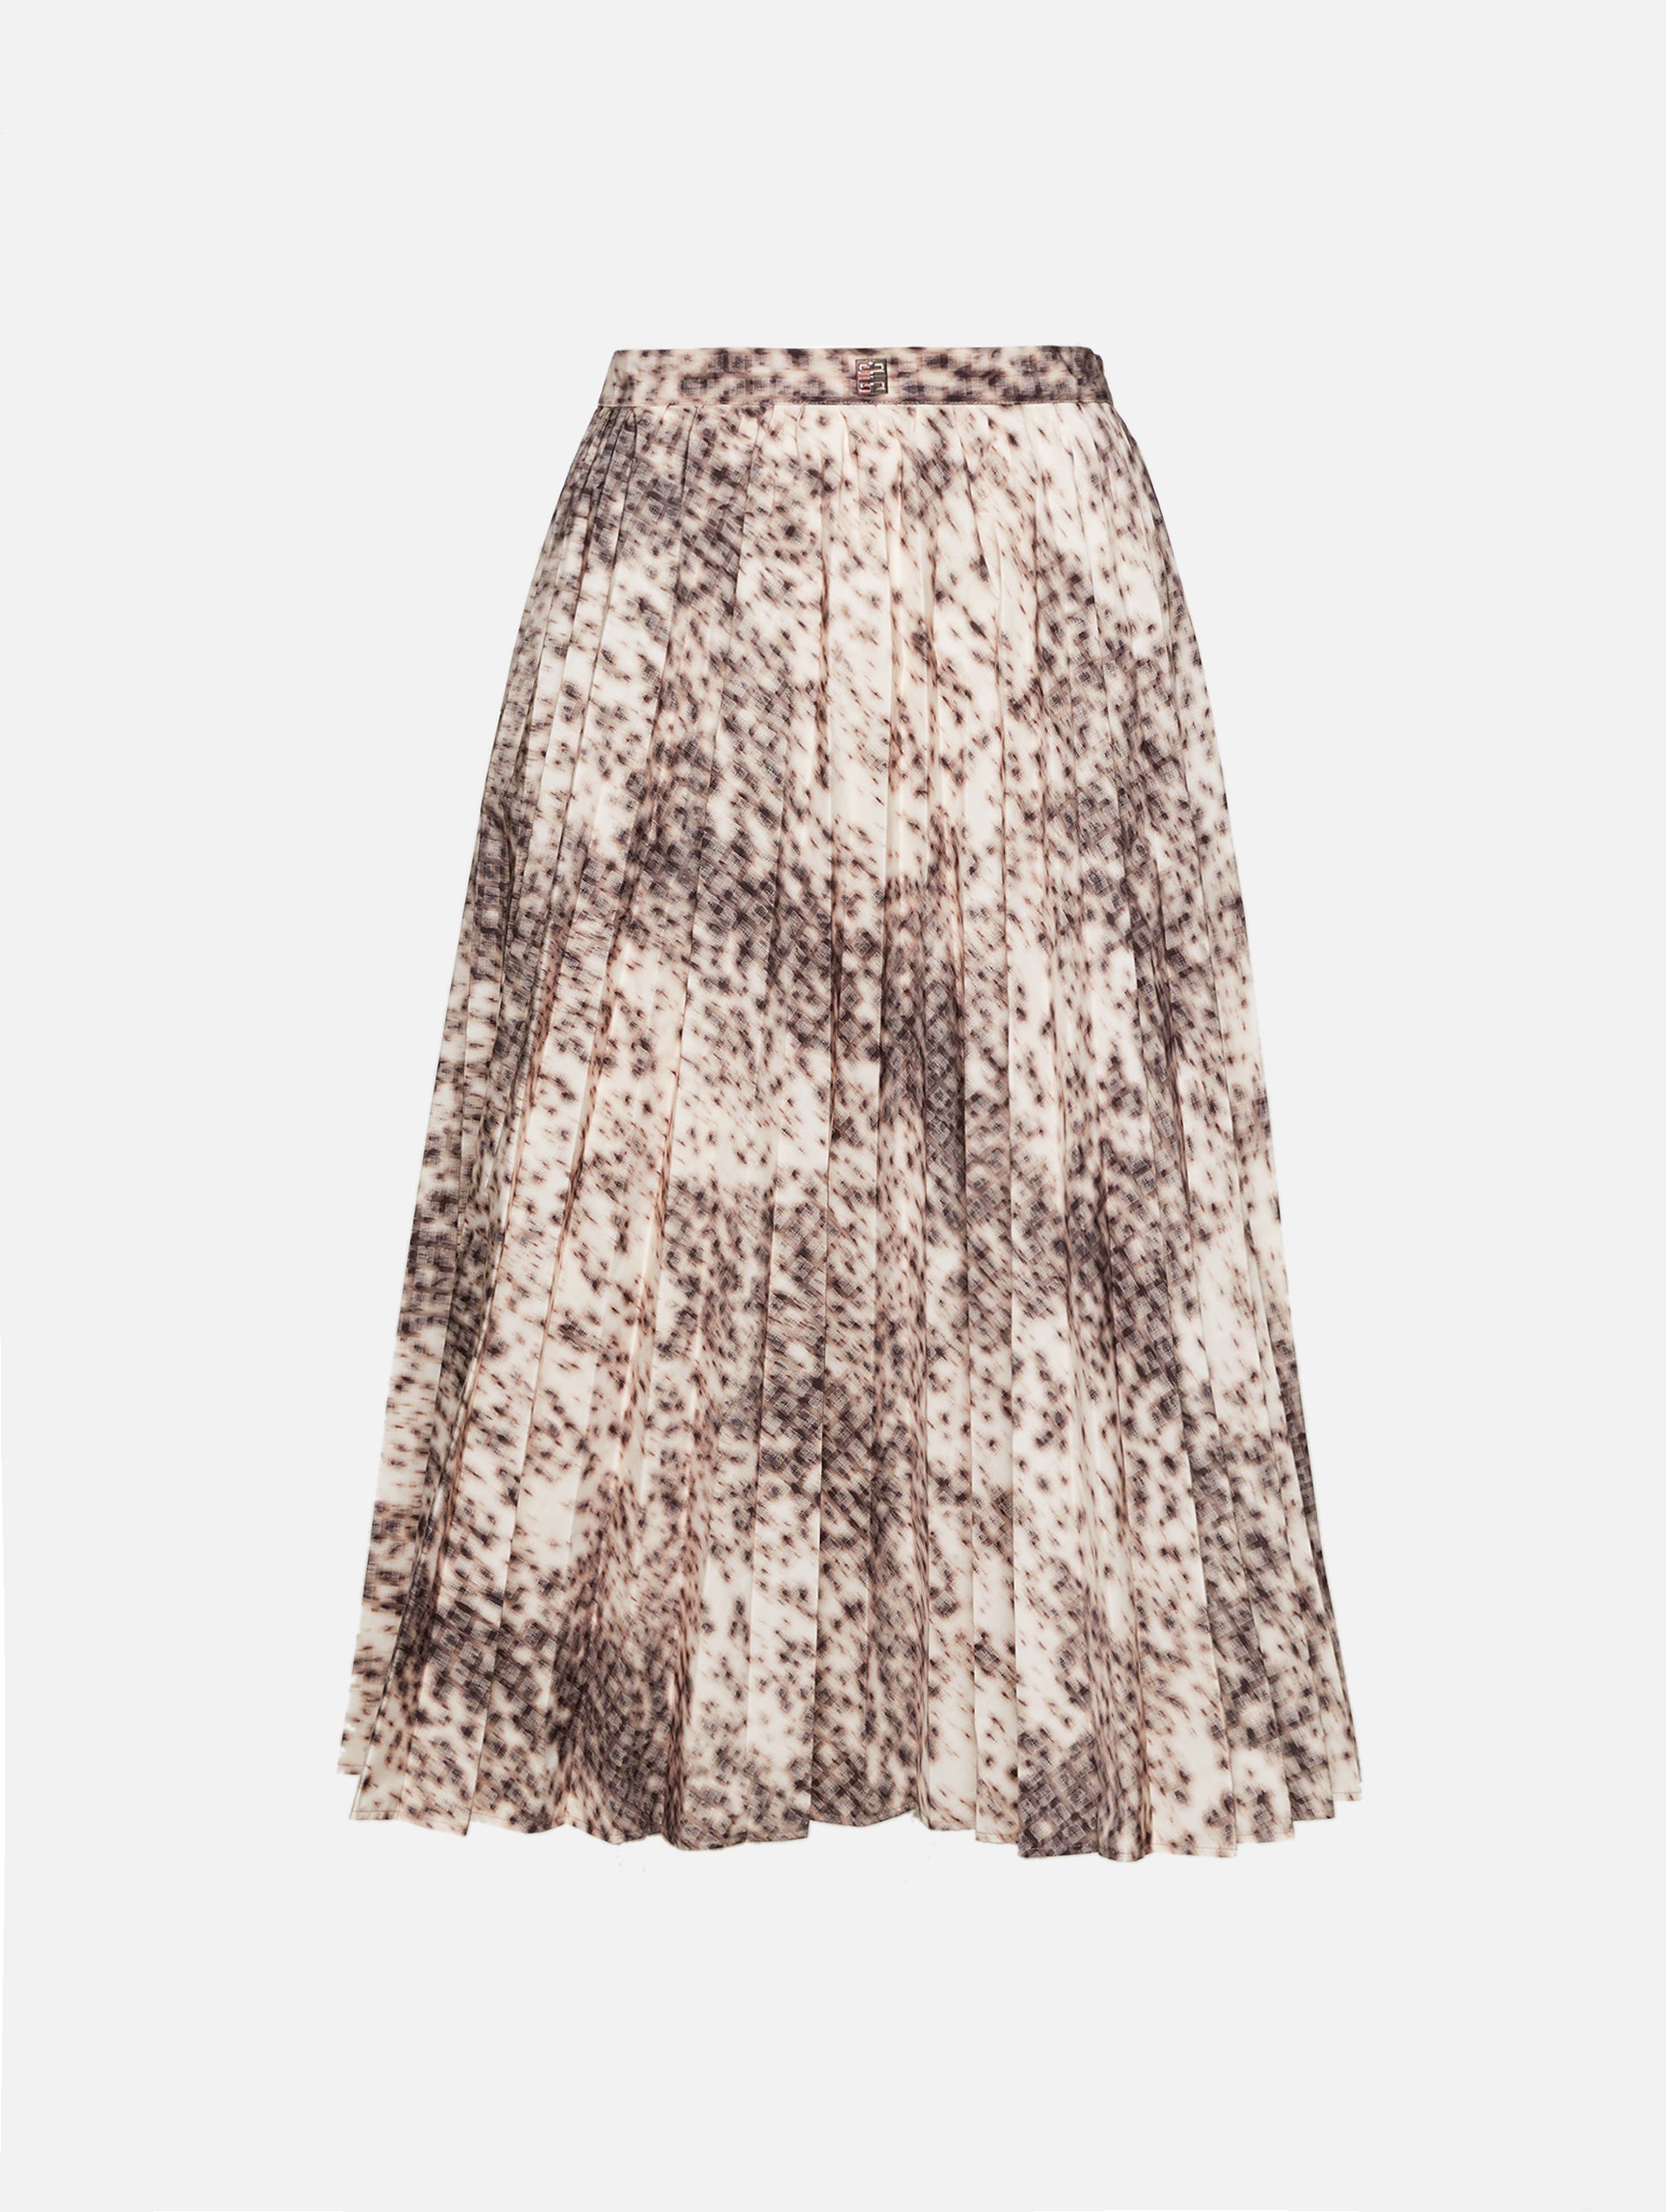 Nitya 183 Double Layer Designer Skirt Kurti Dress New Design at Best Rate